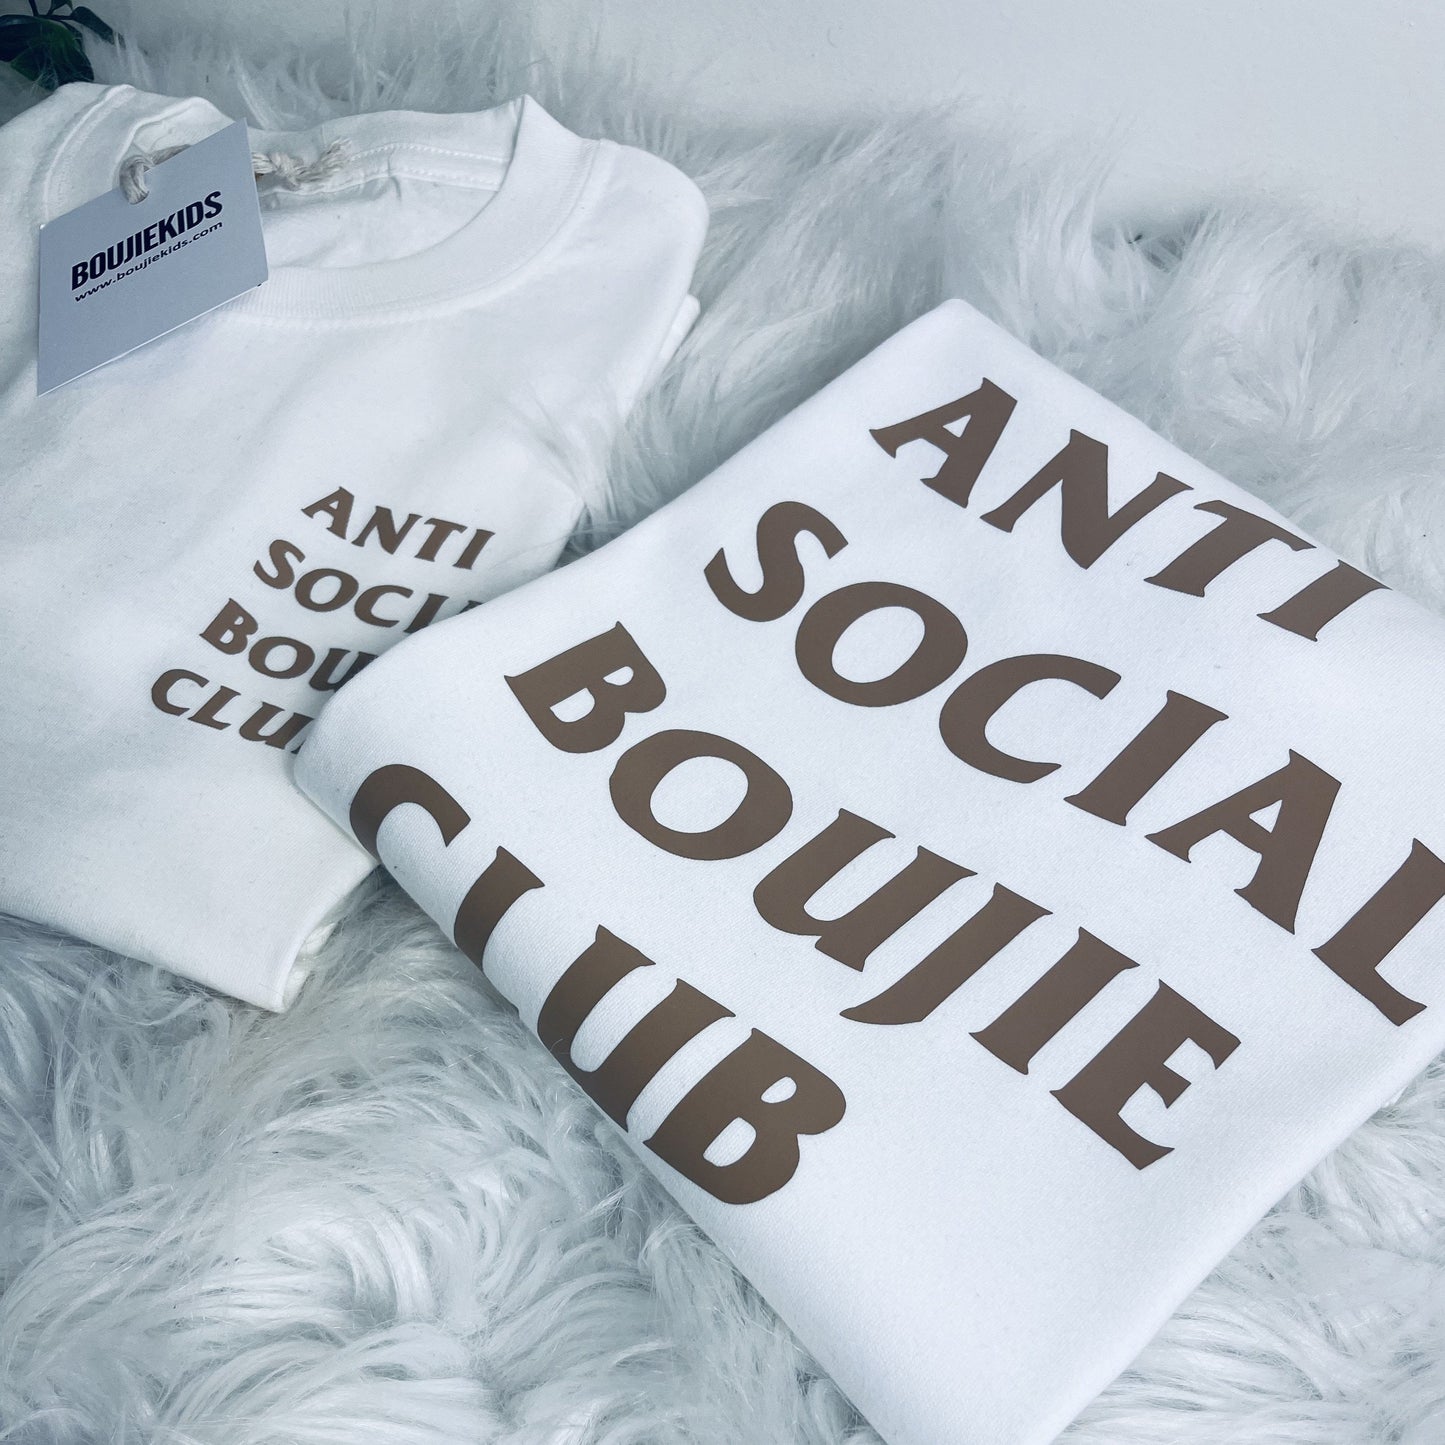 Anti Social Boujie Club T shirt (BH)